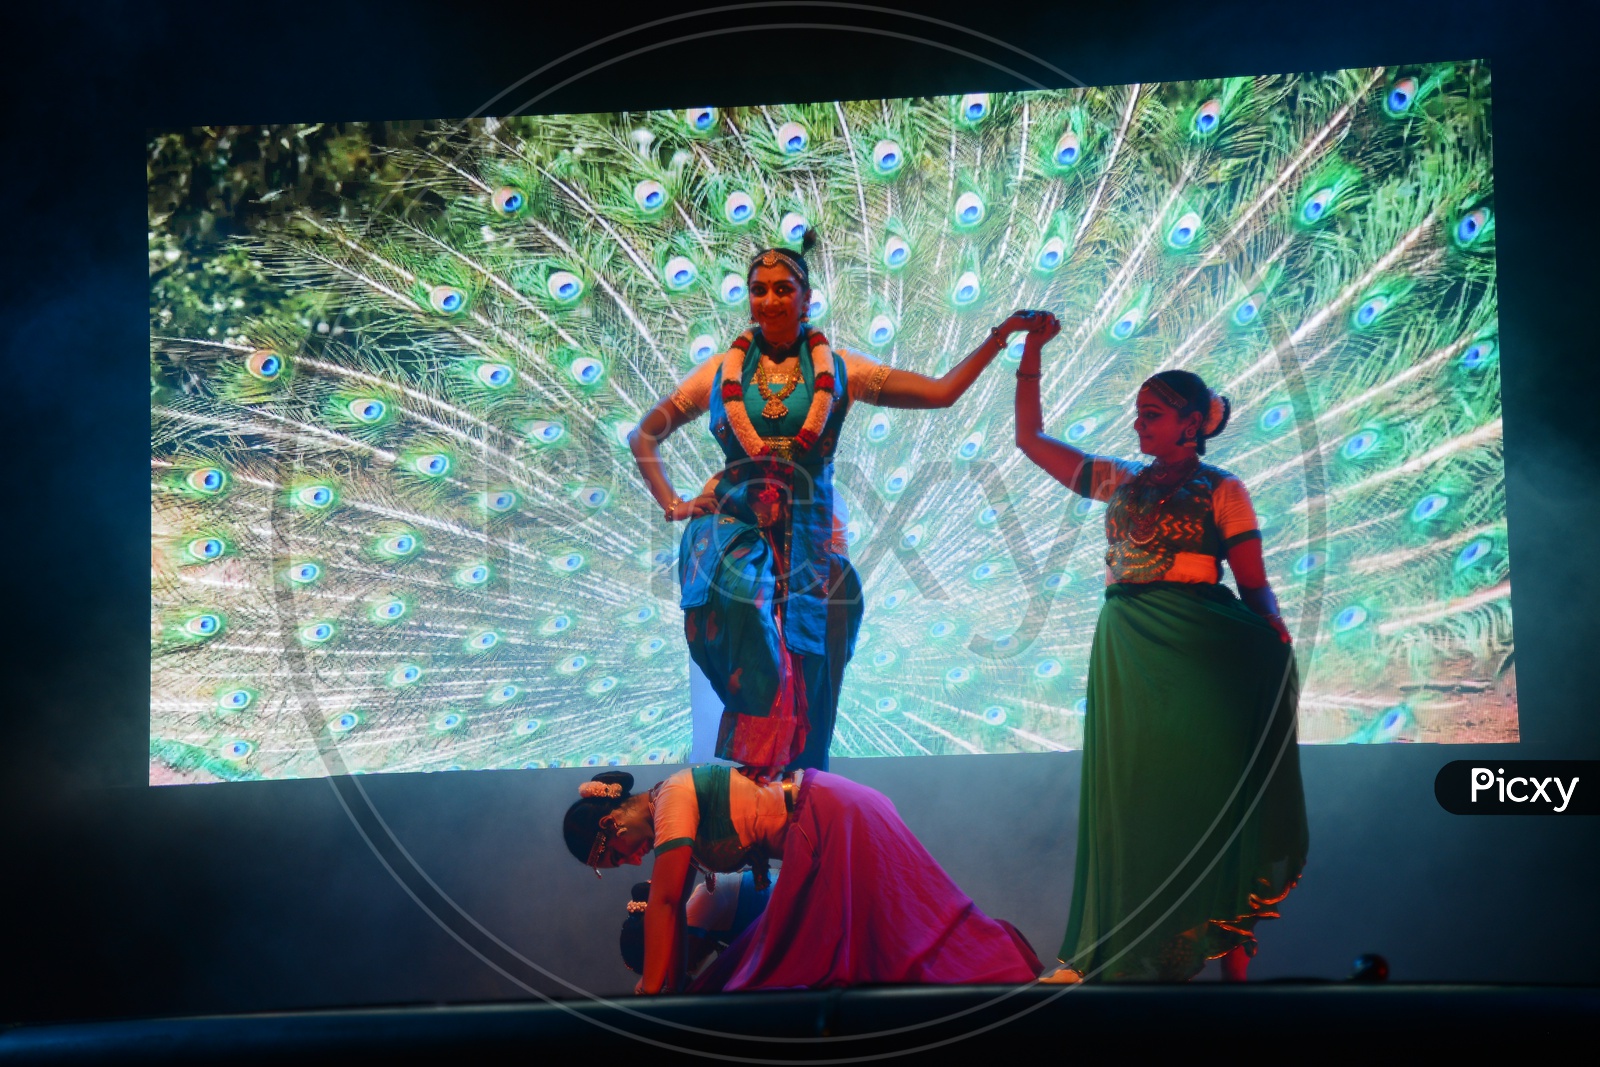 Artists In Sri Krishna Attire  Performing Dance On Stage